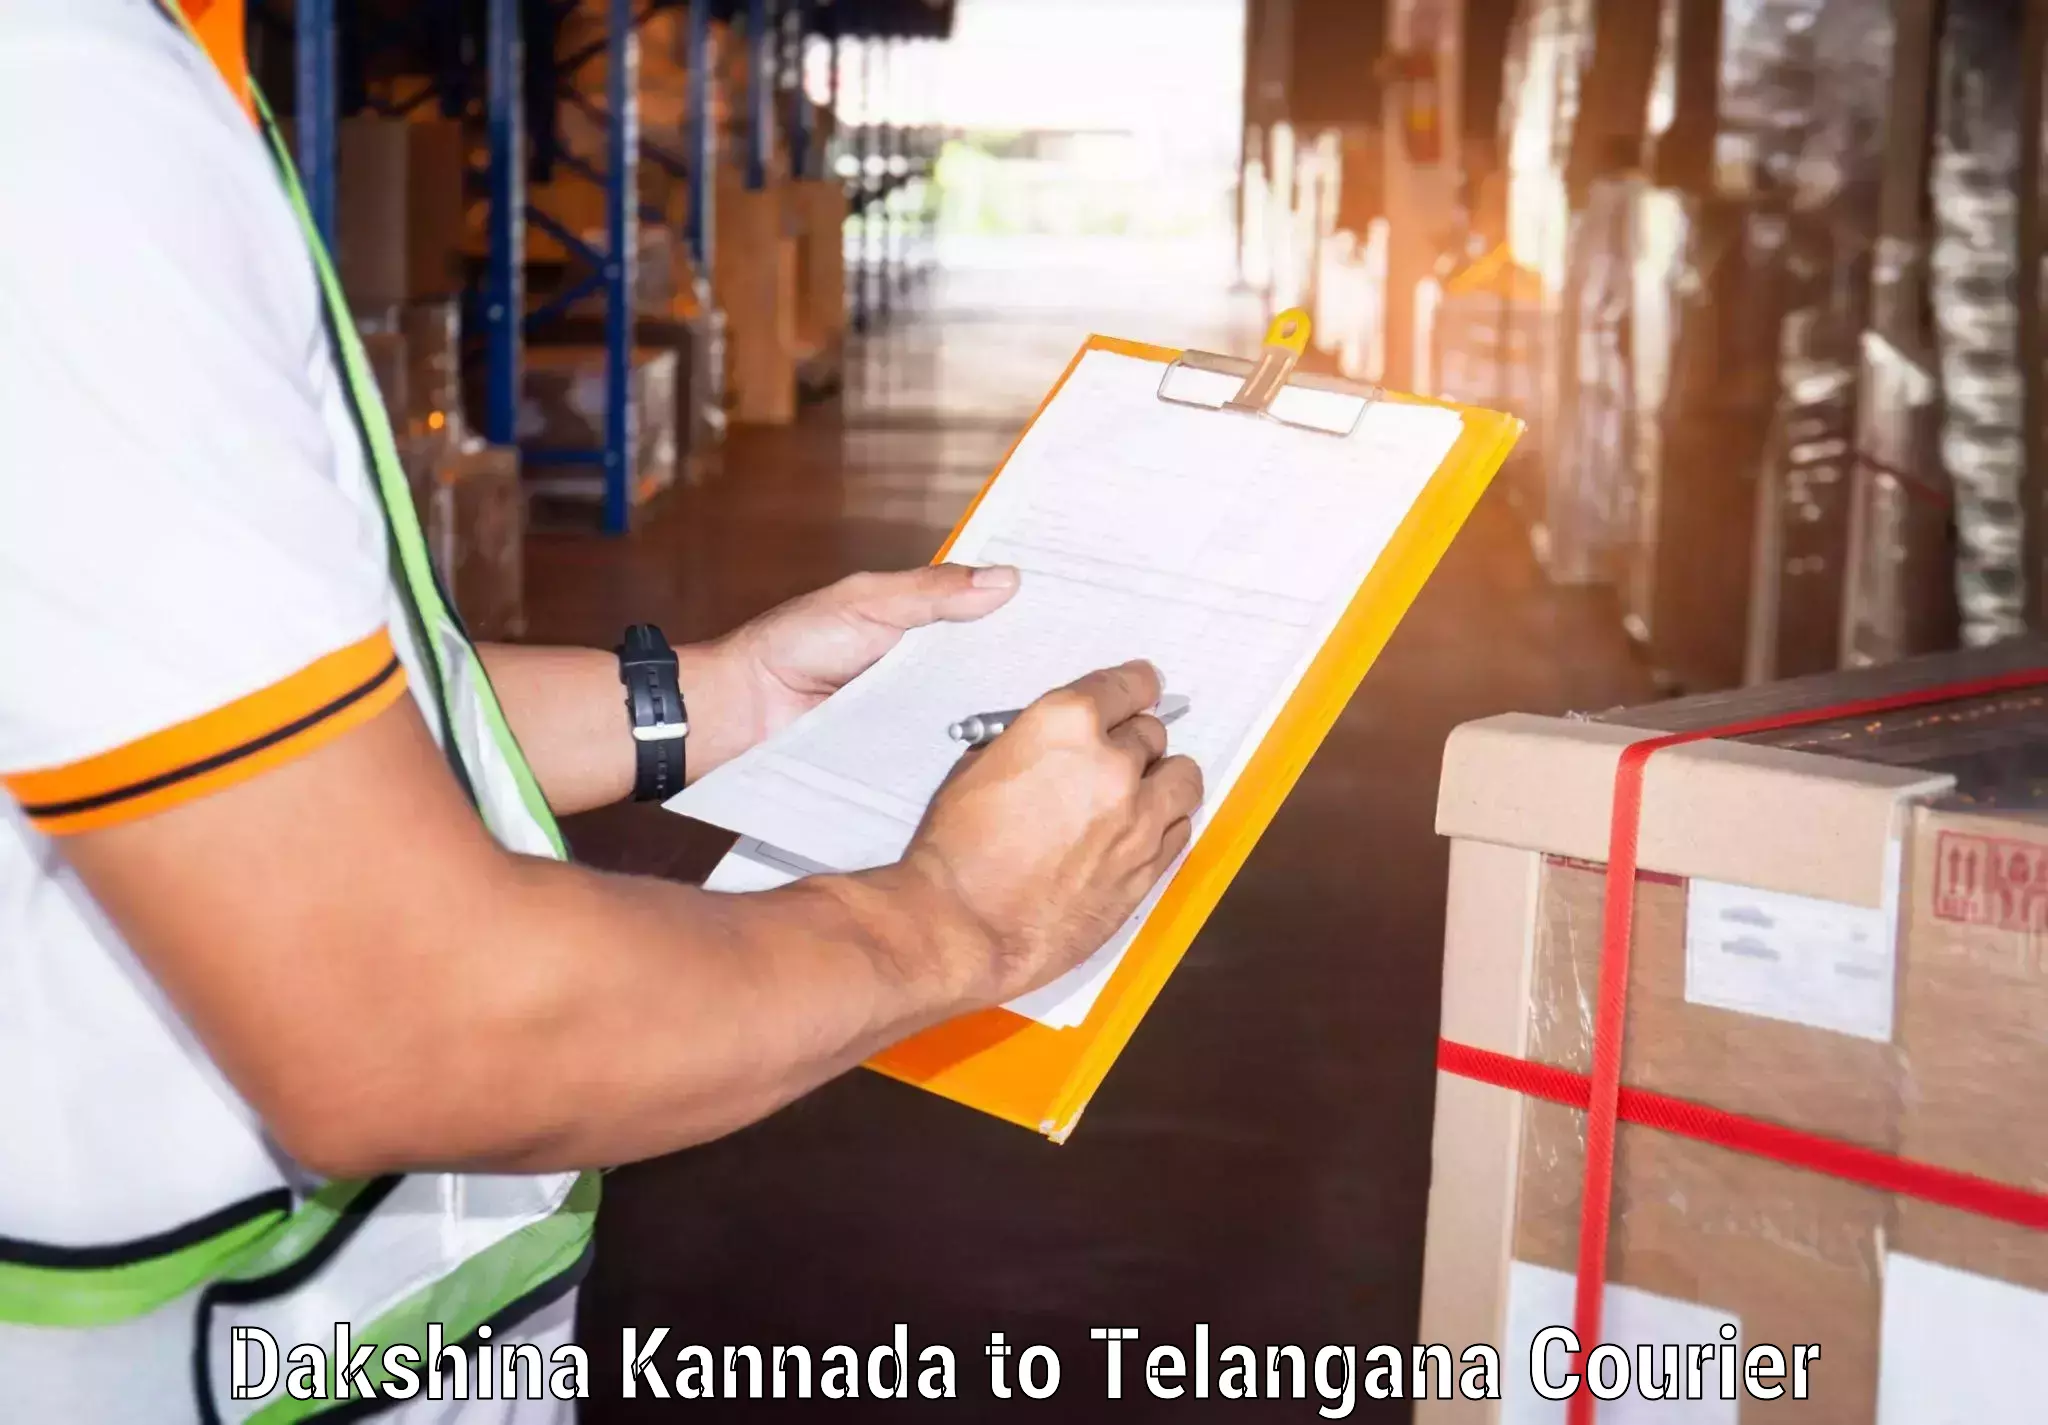 Reliable delivery network Dakshina Kannada to Kacheguda